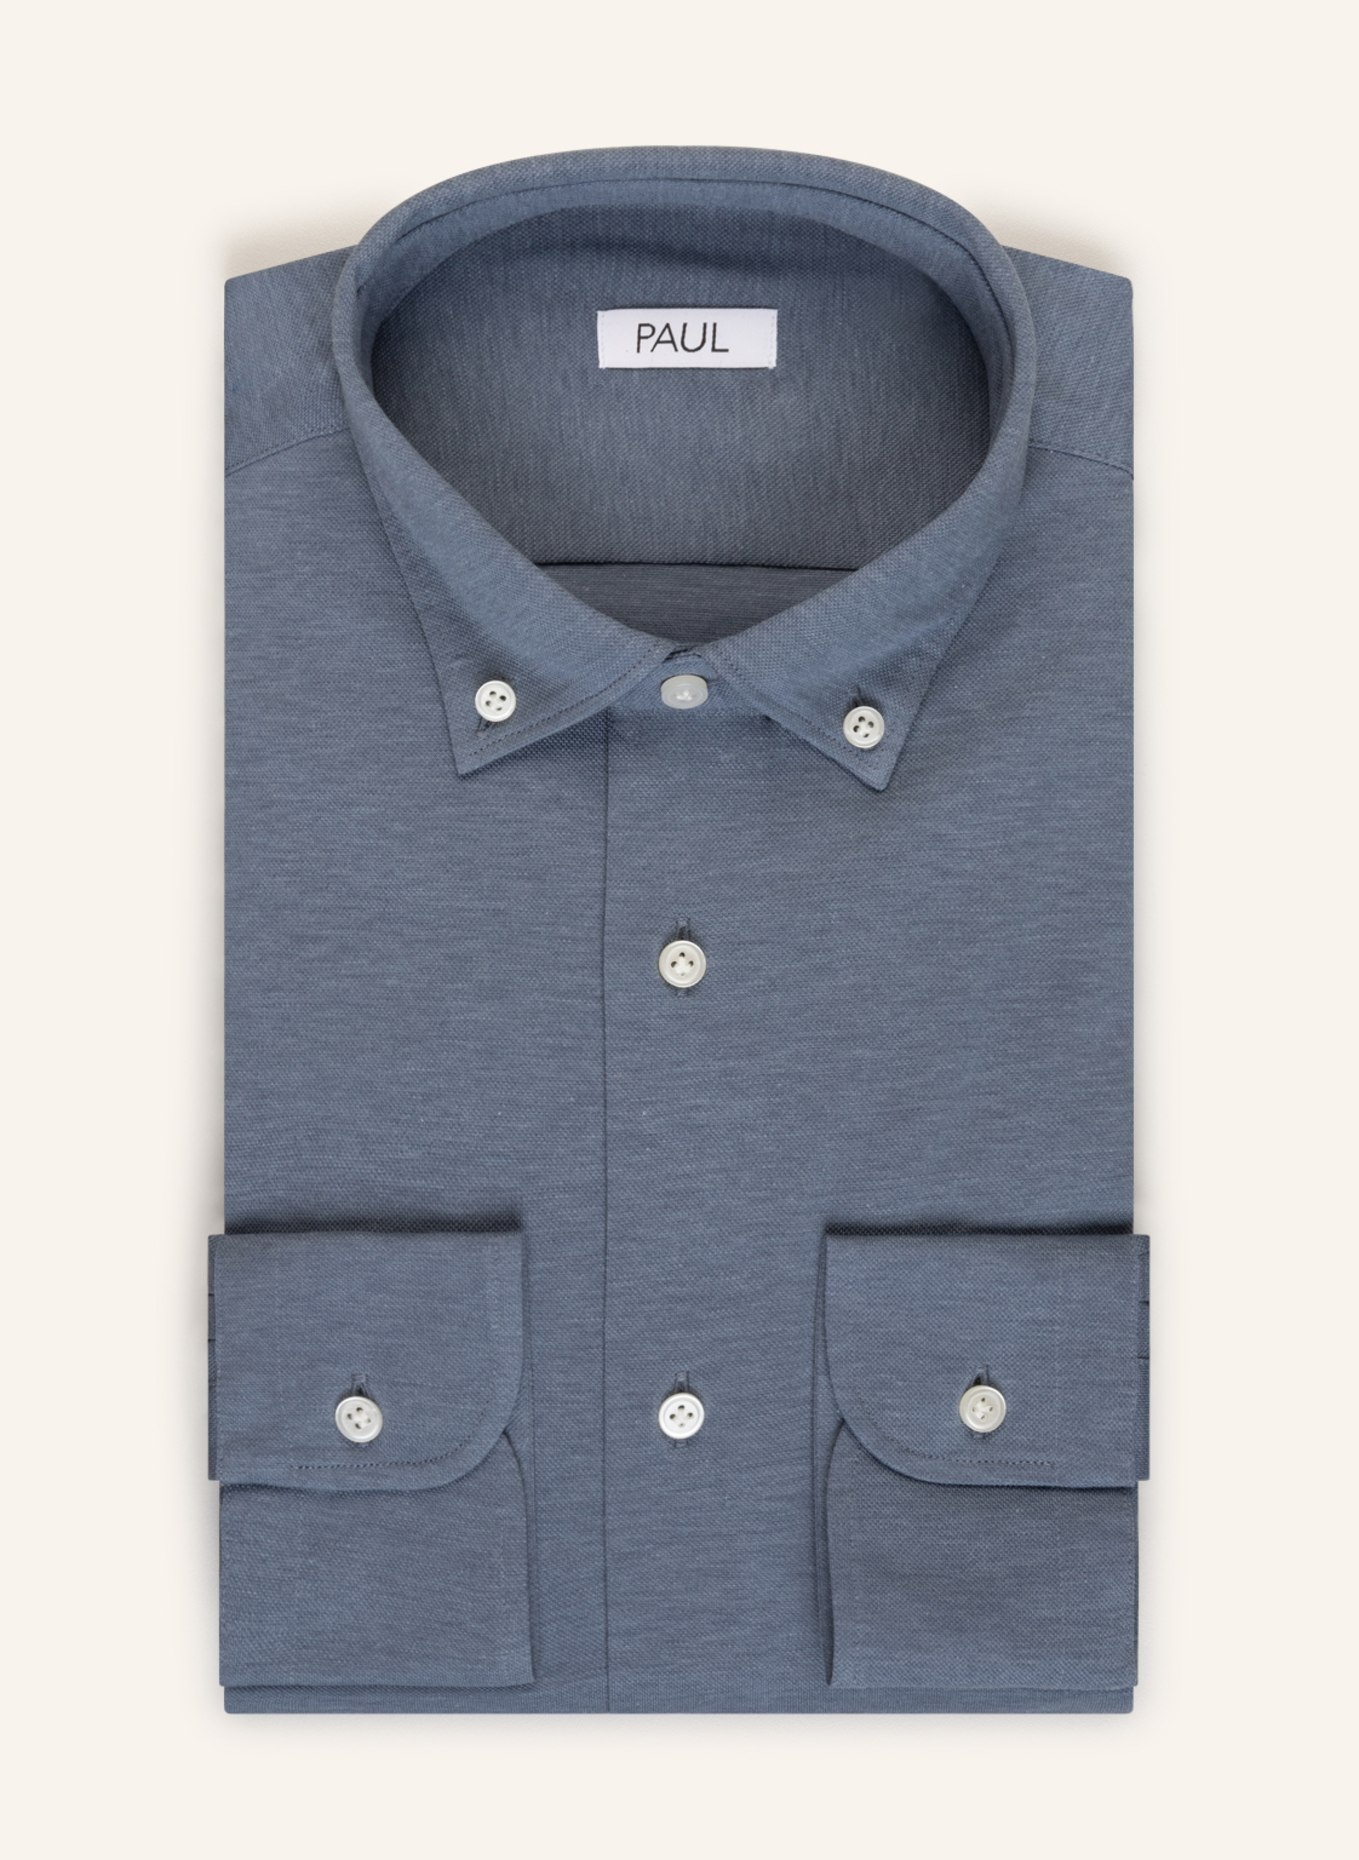 PAUL Piqué-Hemd Slim Fit, Farbe: BLAUGRAU (Bild 1)